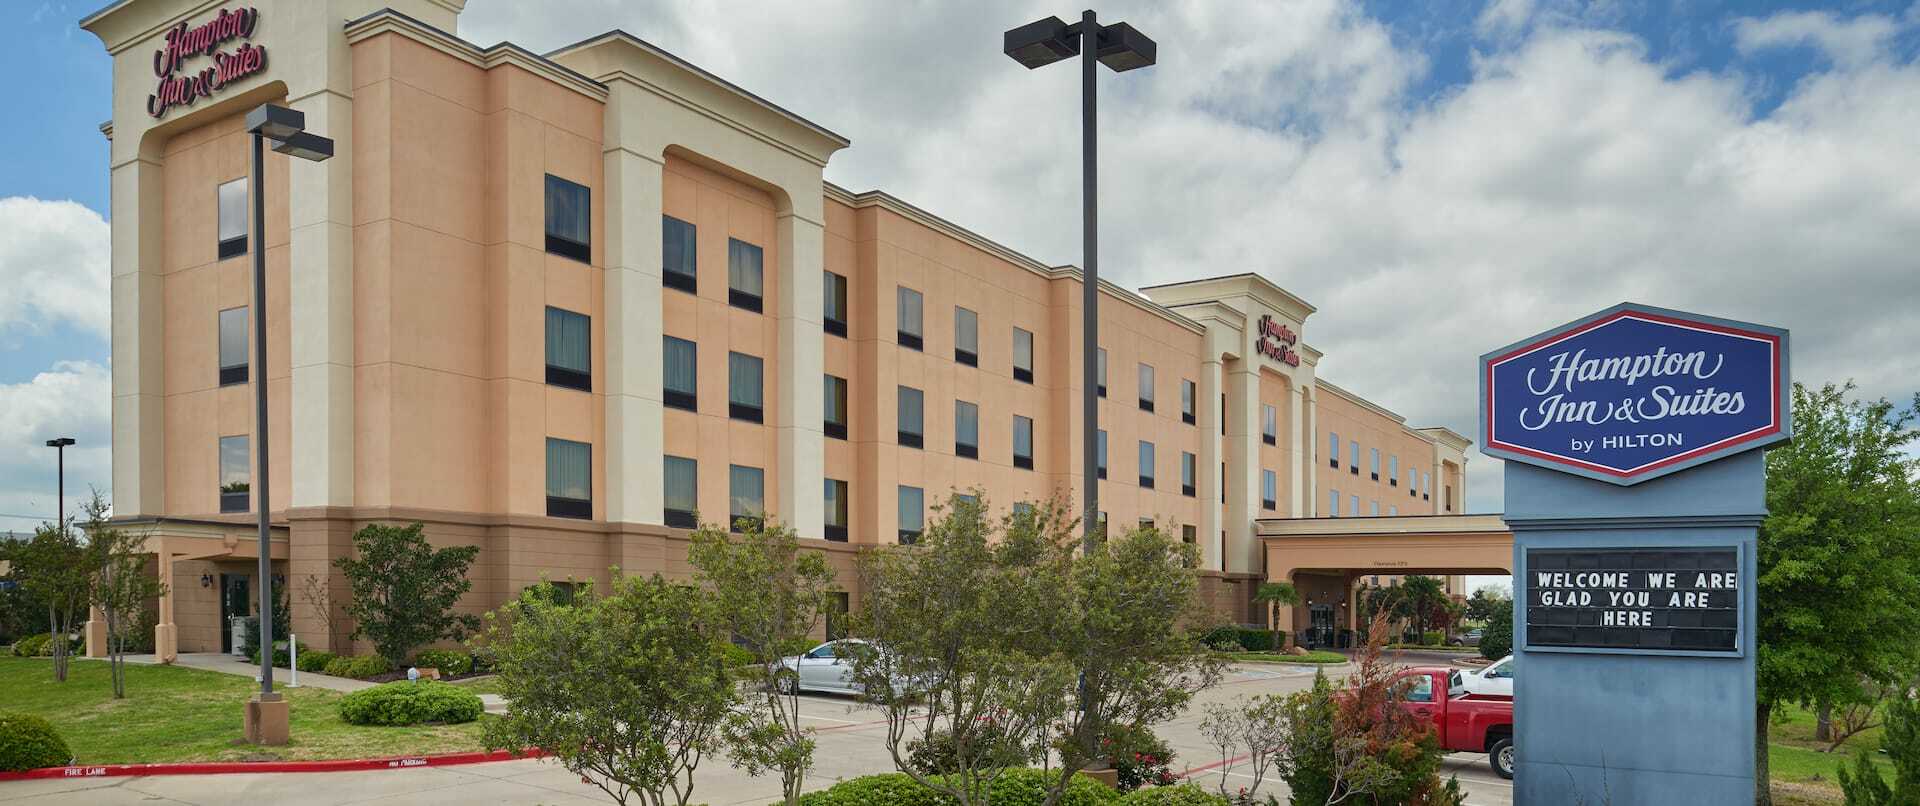 Photo of Hampton Inn & Suites Waco South, Waco, TX